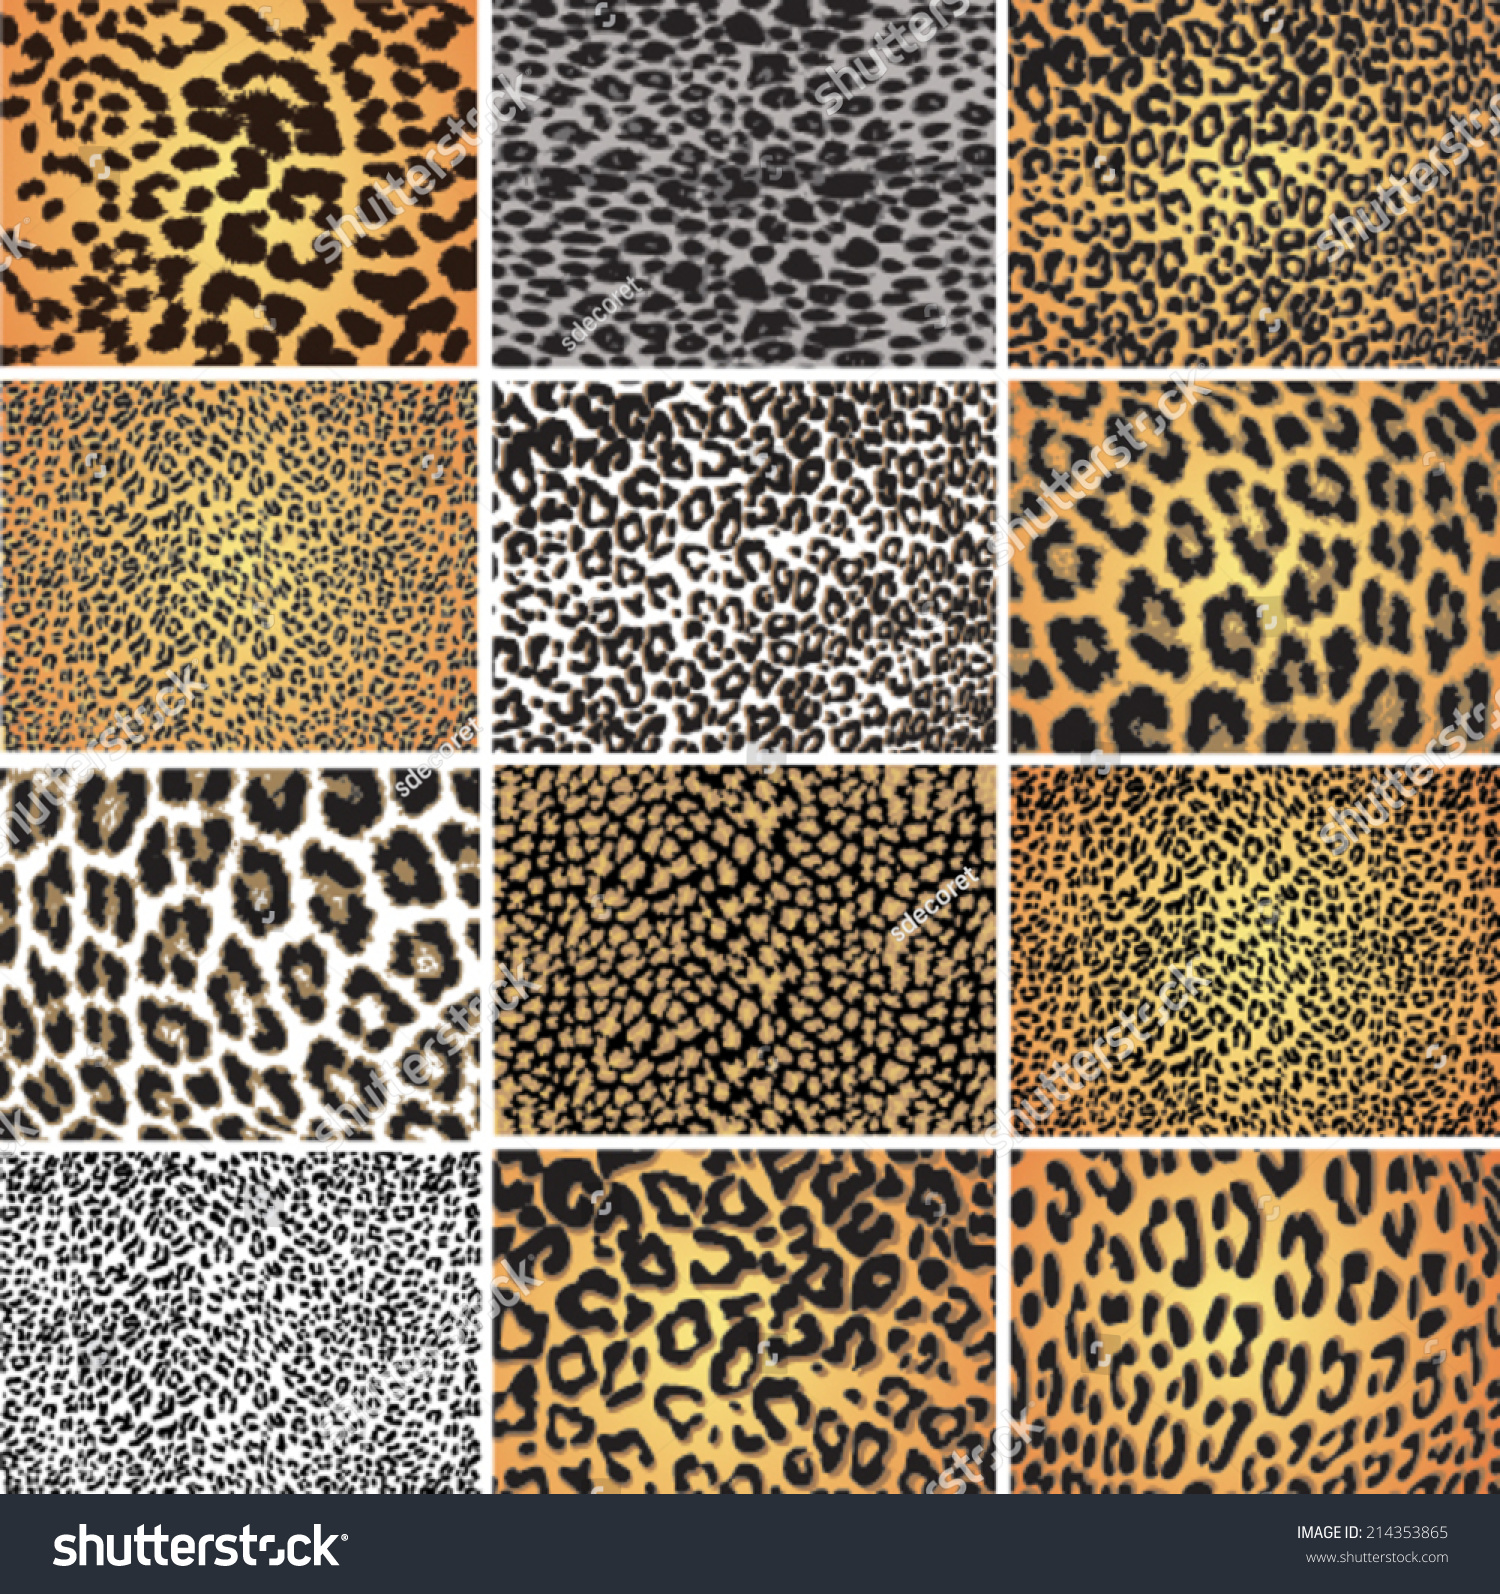 Download Animal Skin Fur Vector Pack Leopard Stock Vector (Royalty Free) 214353865 - Shutterstock